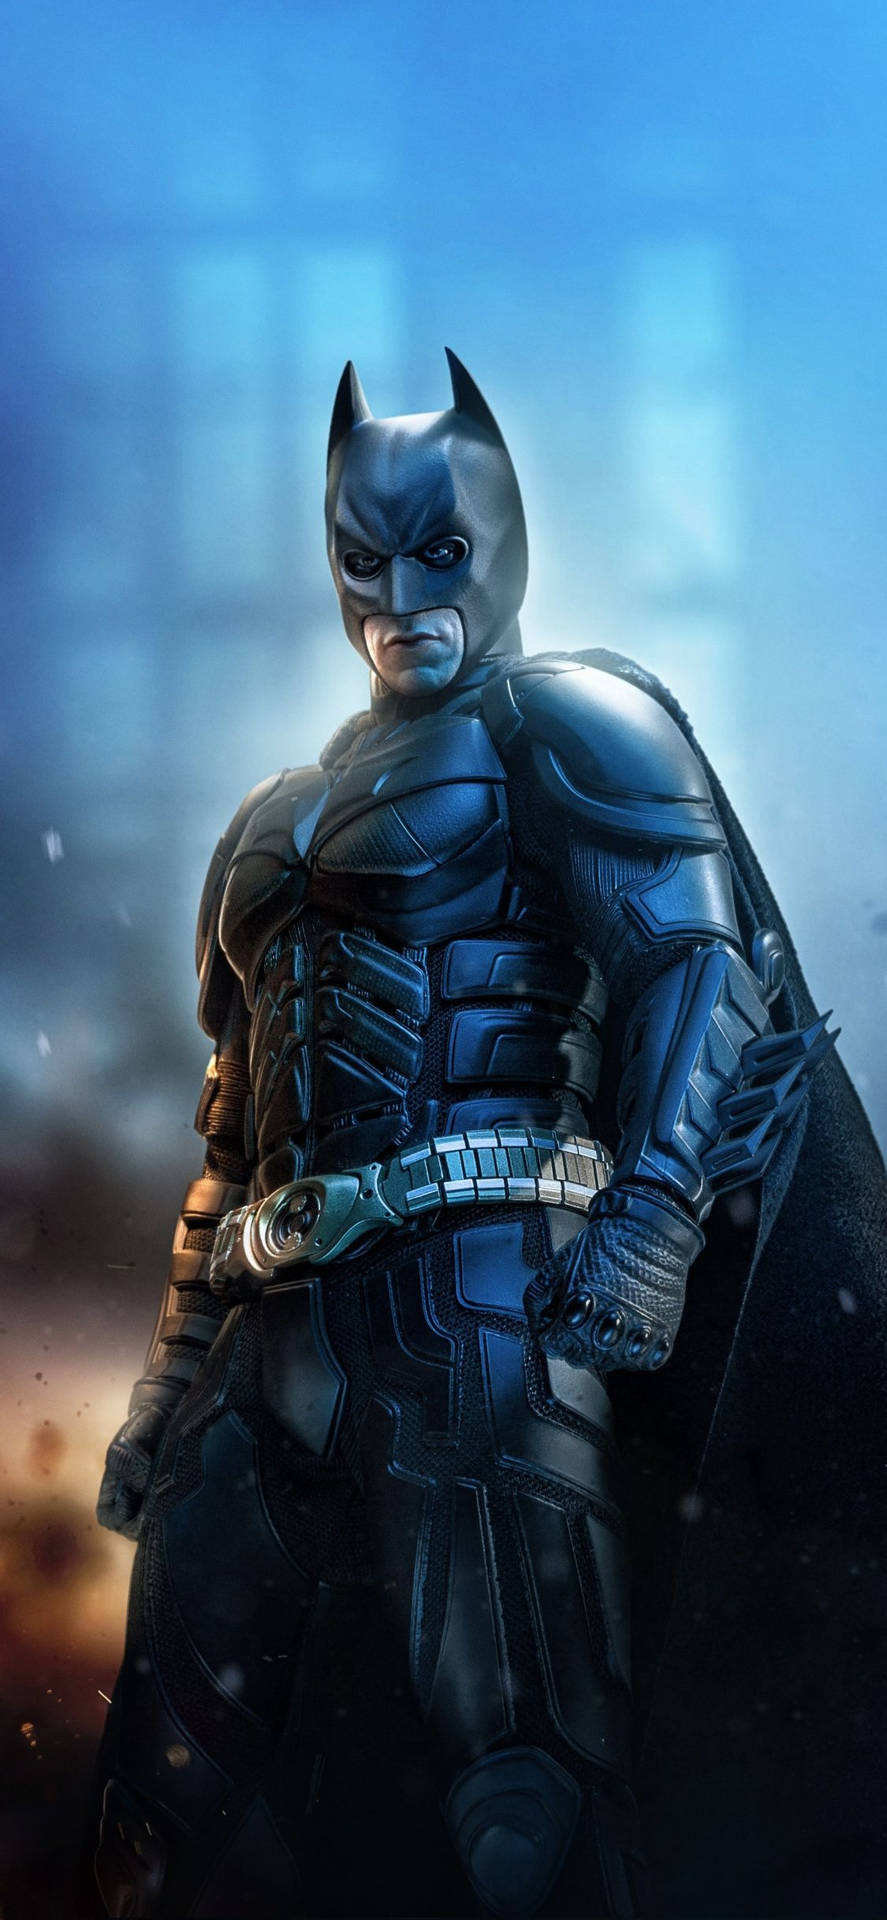 Glowing Blue Batman Arkham Knight iPhone Wallpaper